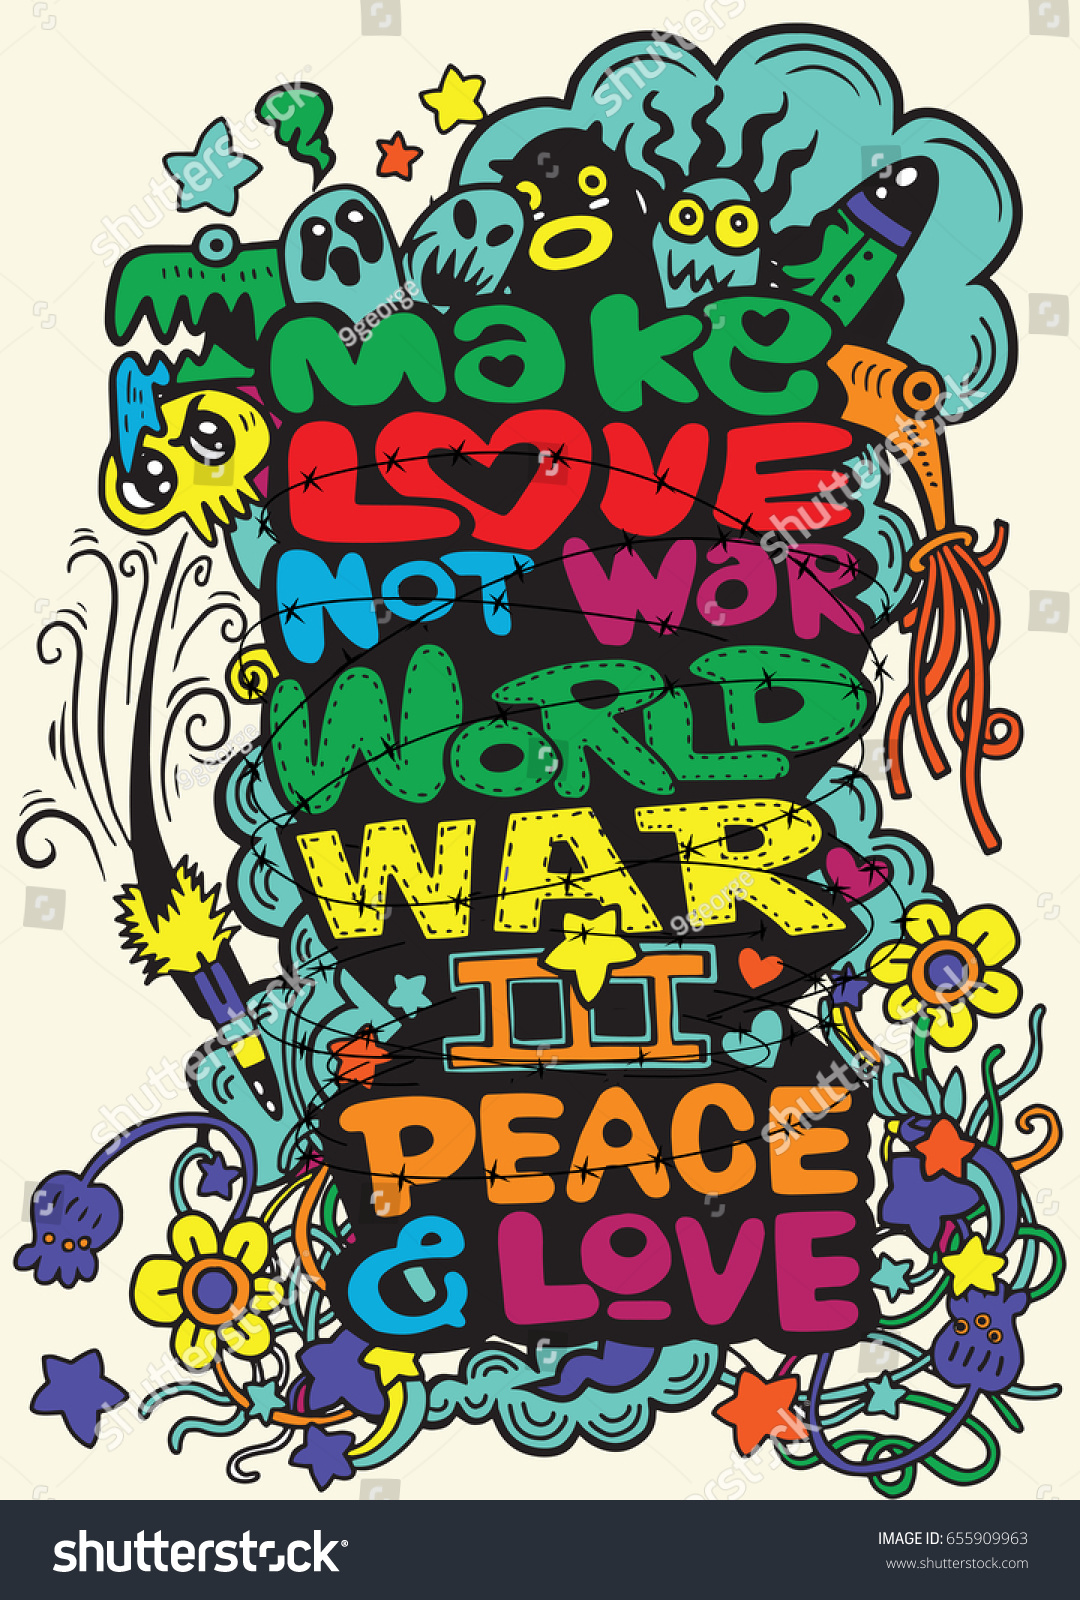 Vector illustration of doodle make love not war Inspirational quote Hand drawn vintage